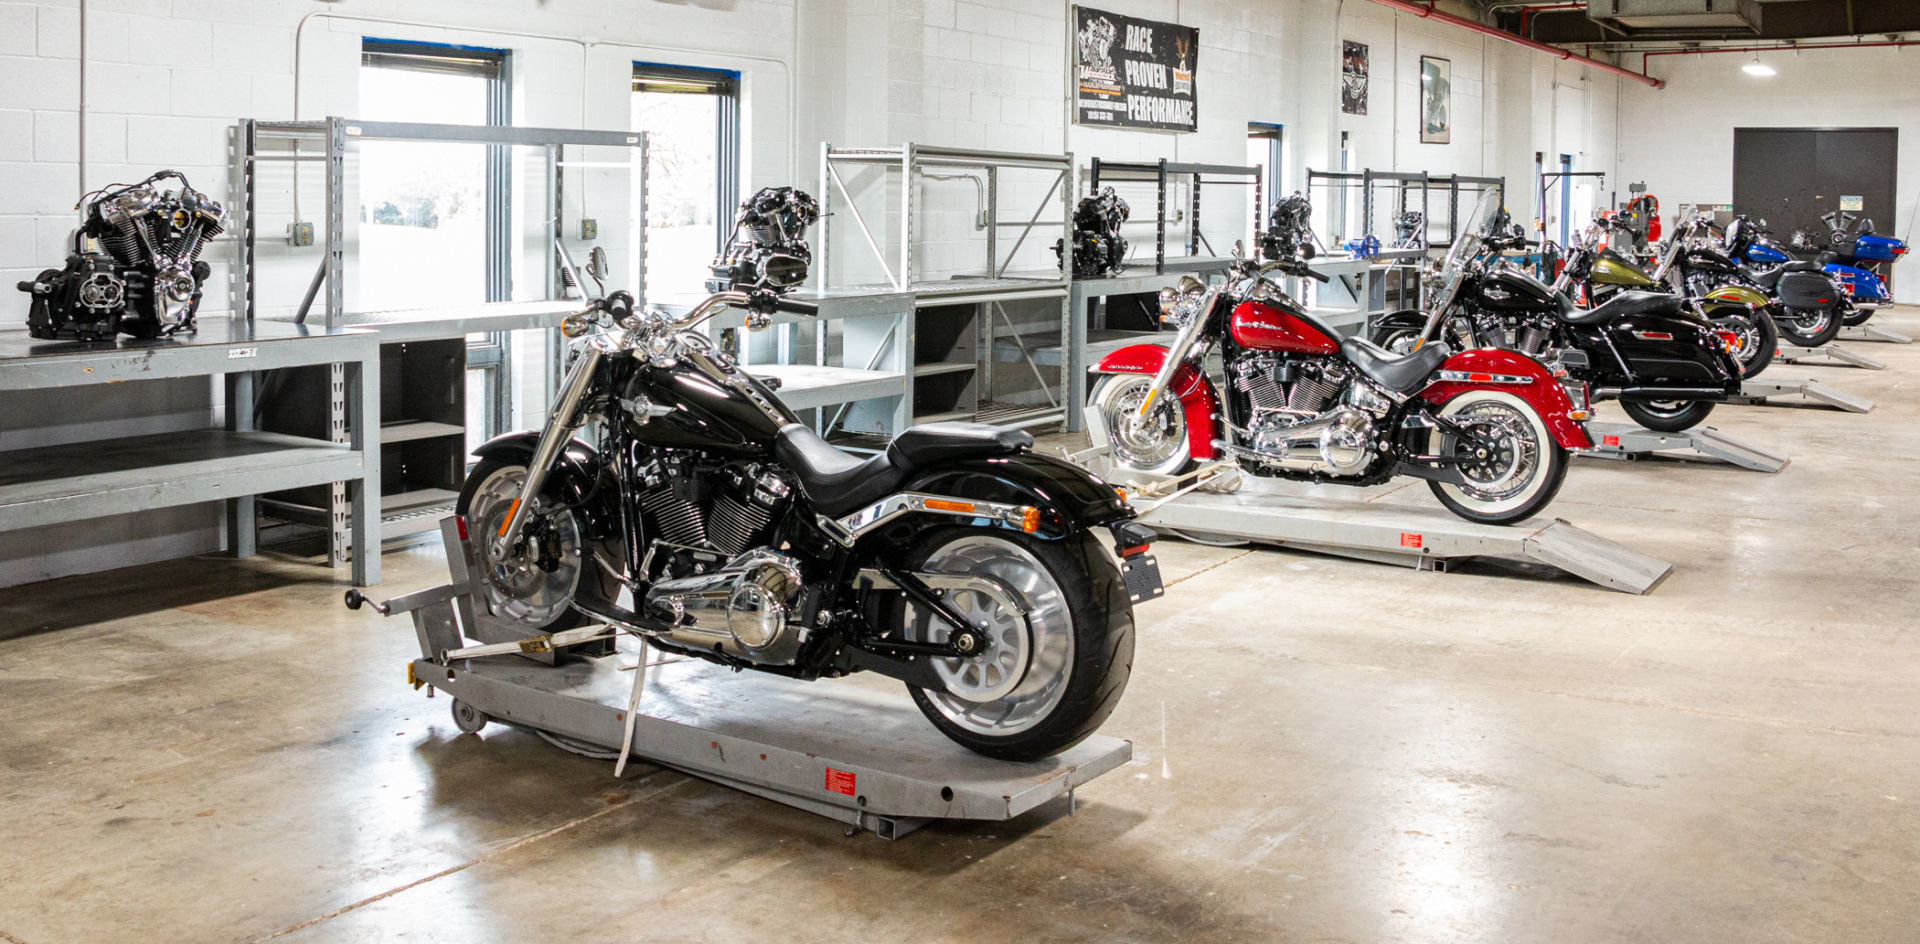 Inside the Midwest Motorcycle Mechanic School. Photo courtesy Midwest Motorcycle Mechanic School.